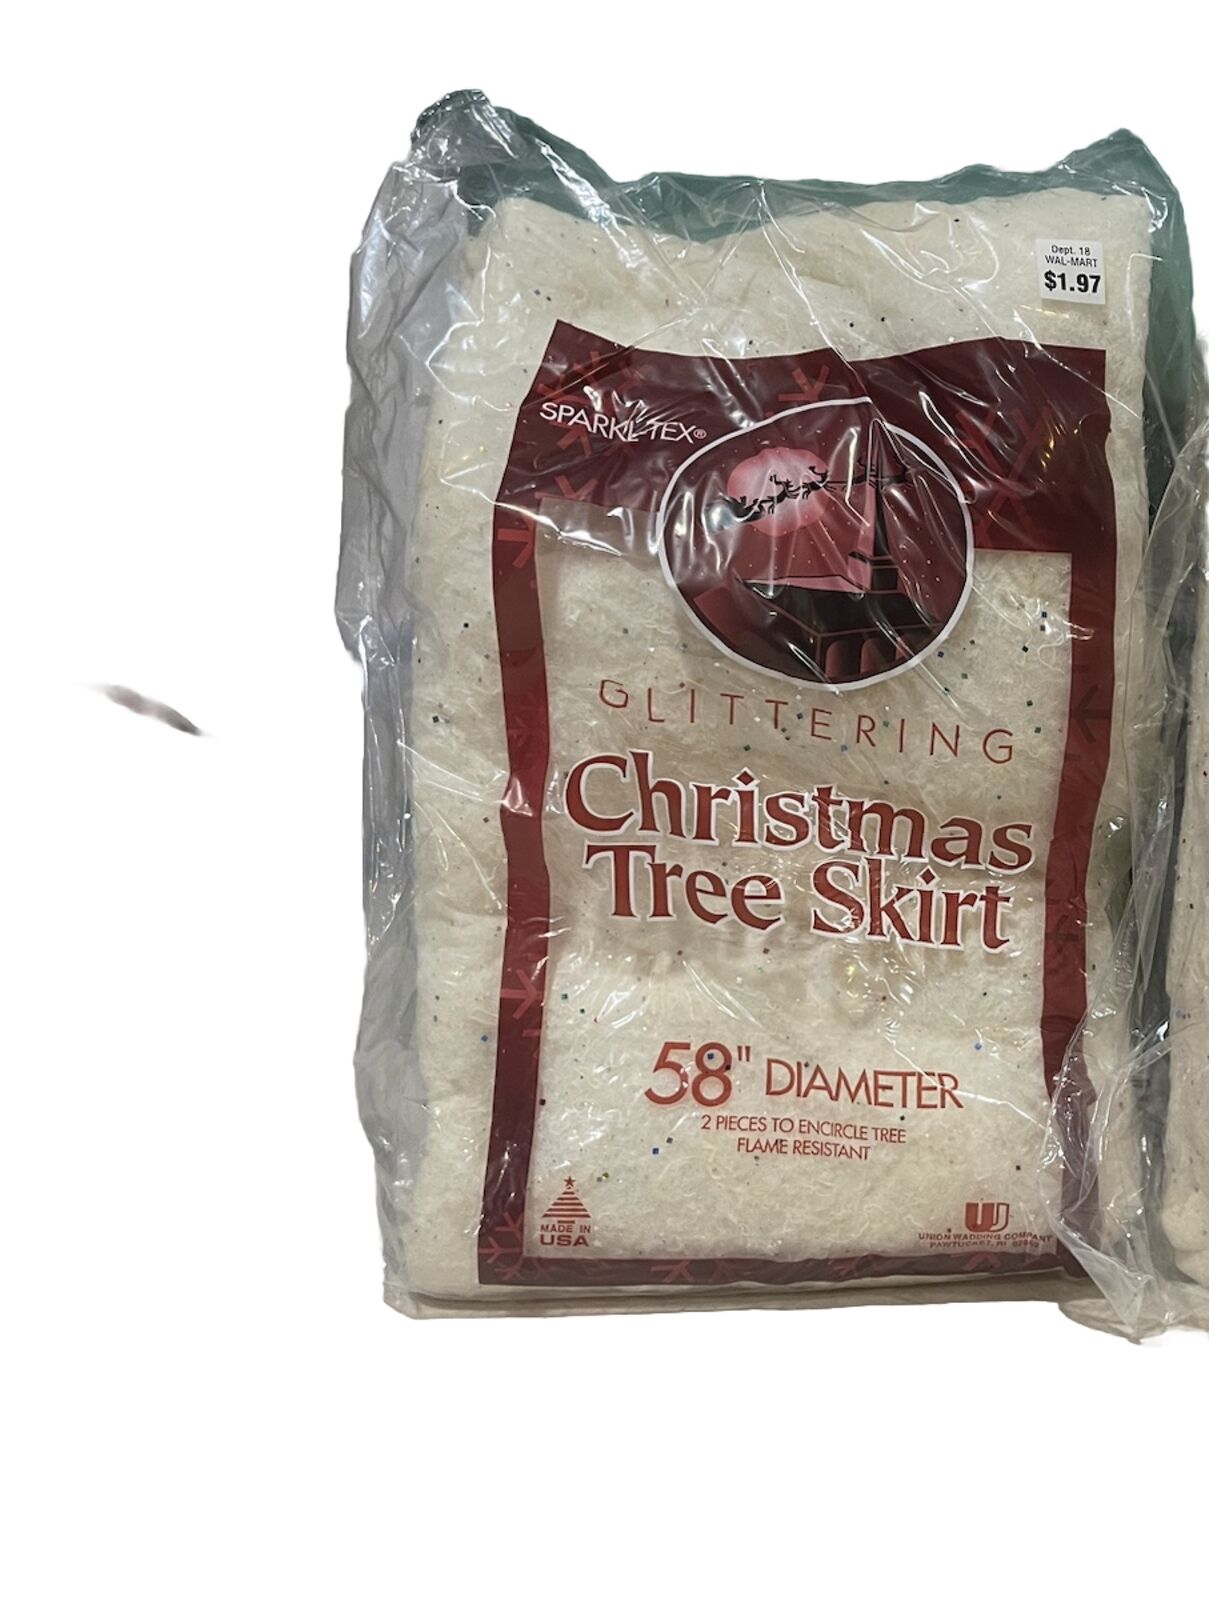 NOS Vintage Tree Skirt Sparkl-Tex Glittering Christmas Drape 56\